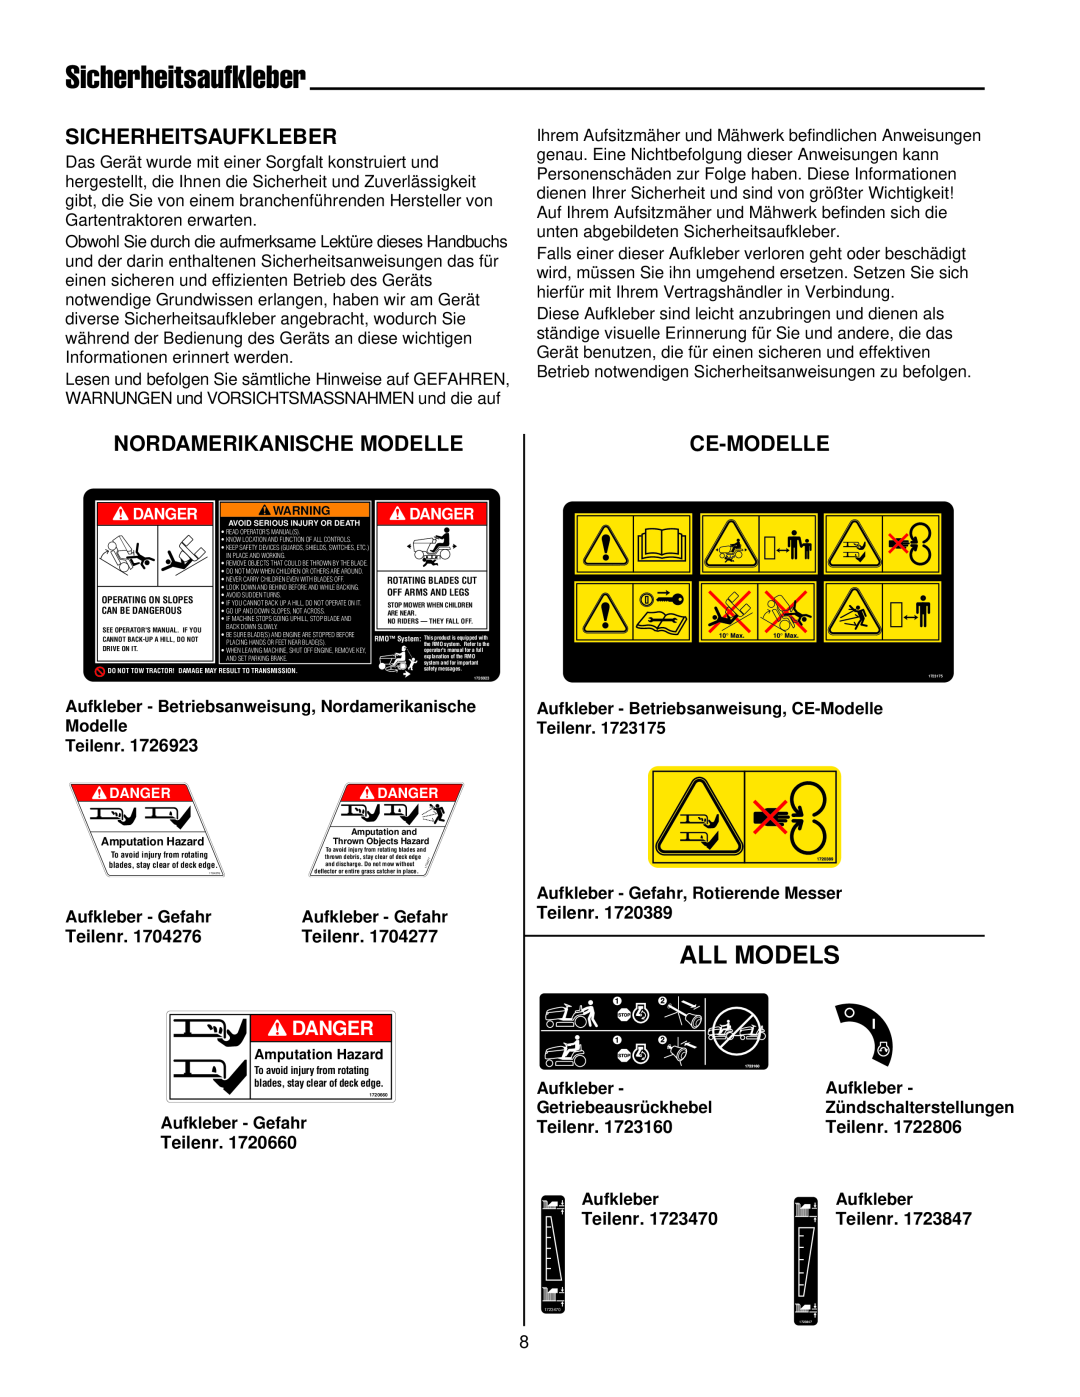 Simplicity 300 manual Sicherheitsaufkleber, All Models, Nordamerikanische Modelle, Danger, Aufkleber - Gefahr, Teilenr 